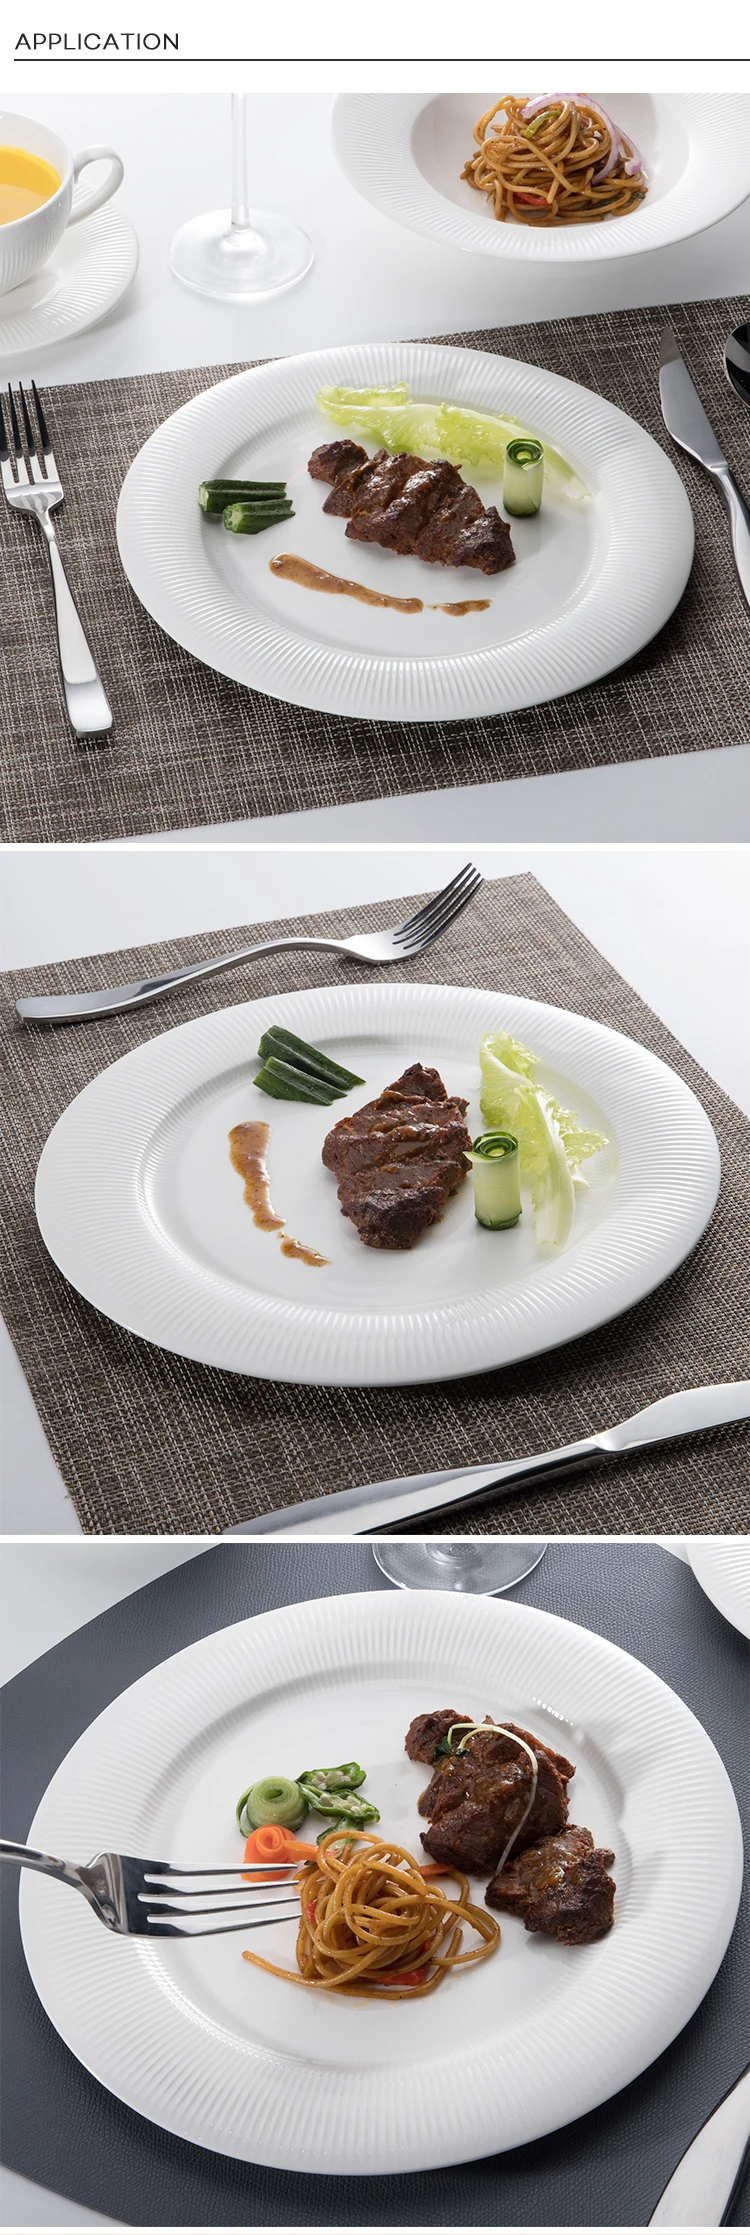 Microwave Safe Catering Dinnerware Salad Porcelain Plates Dishes, Wedding Crokery Tableware Horeca Dinner Ceramic Pizza Plate$